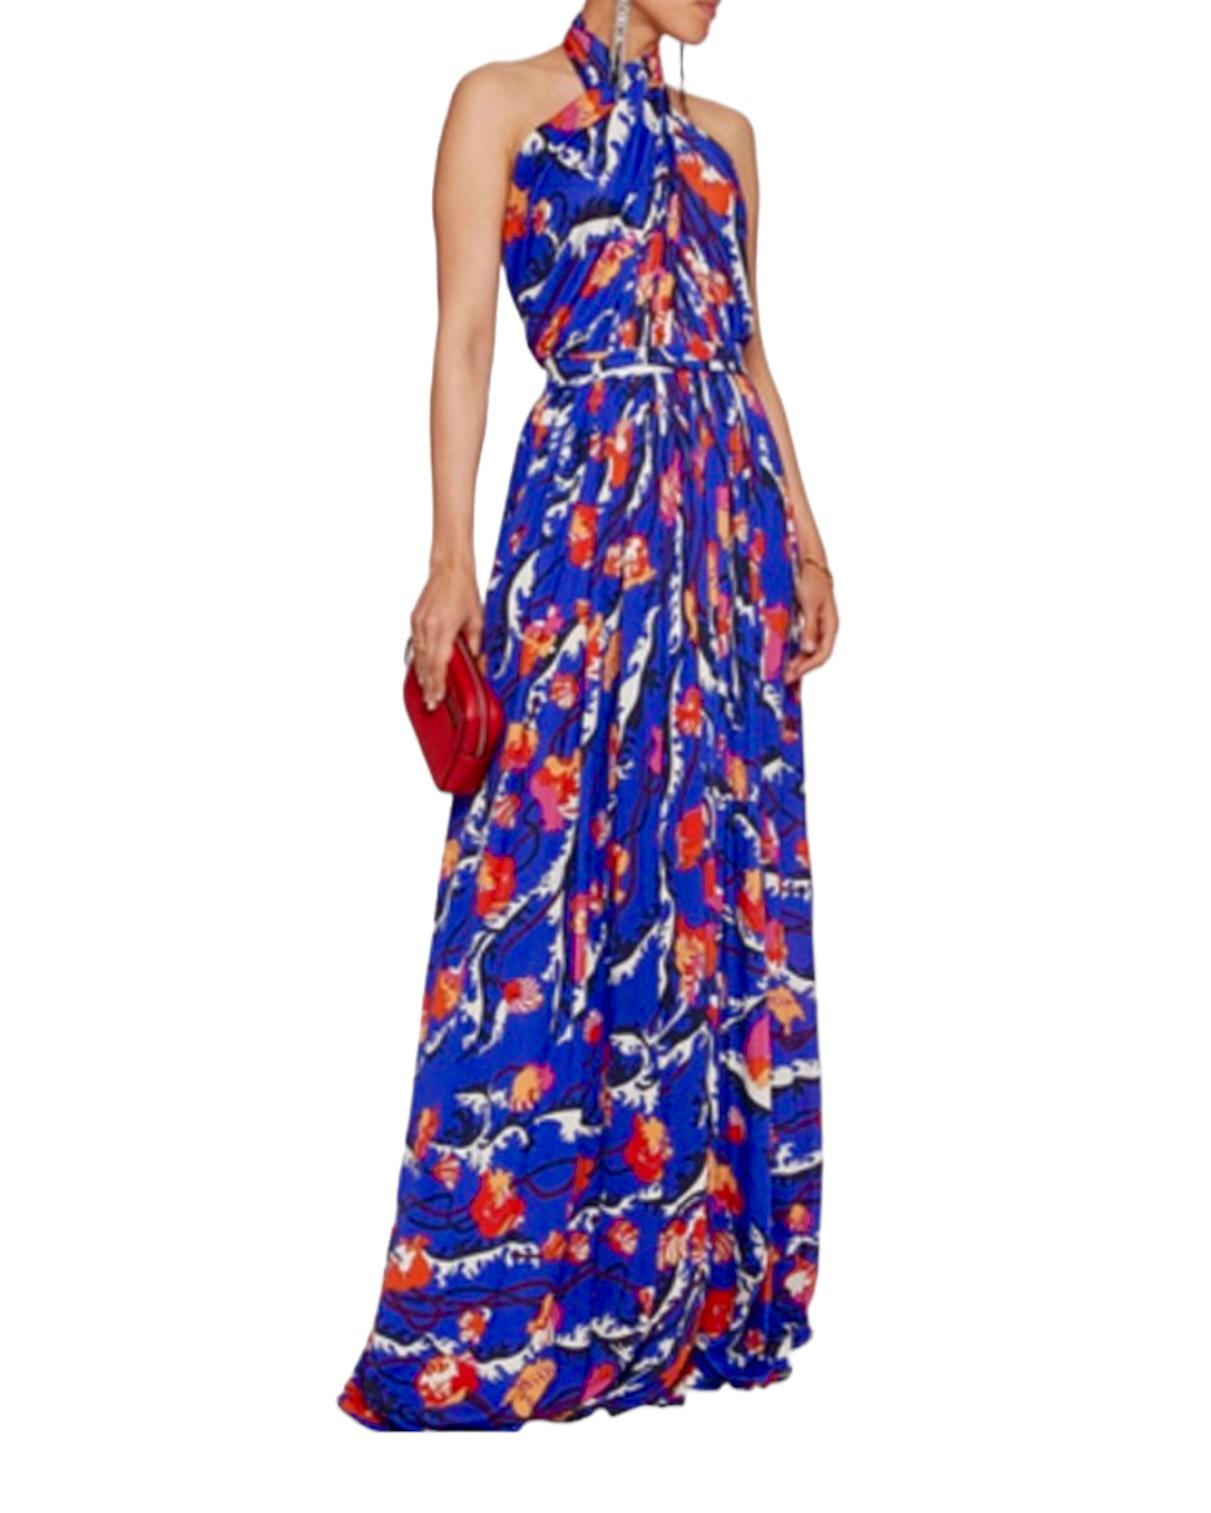 NEW Emilio Pucci Signature Print  Neckholder Maxi Dress Gown 42 For Sale 7